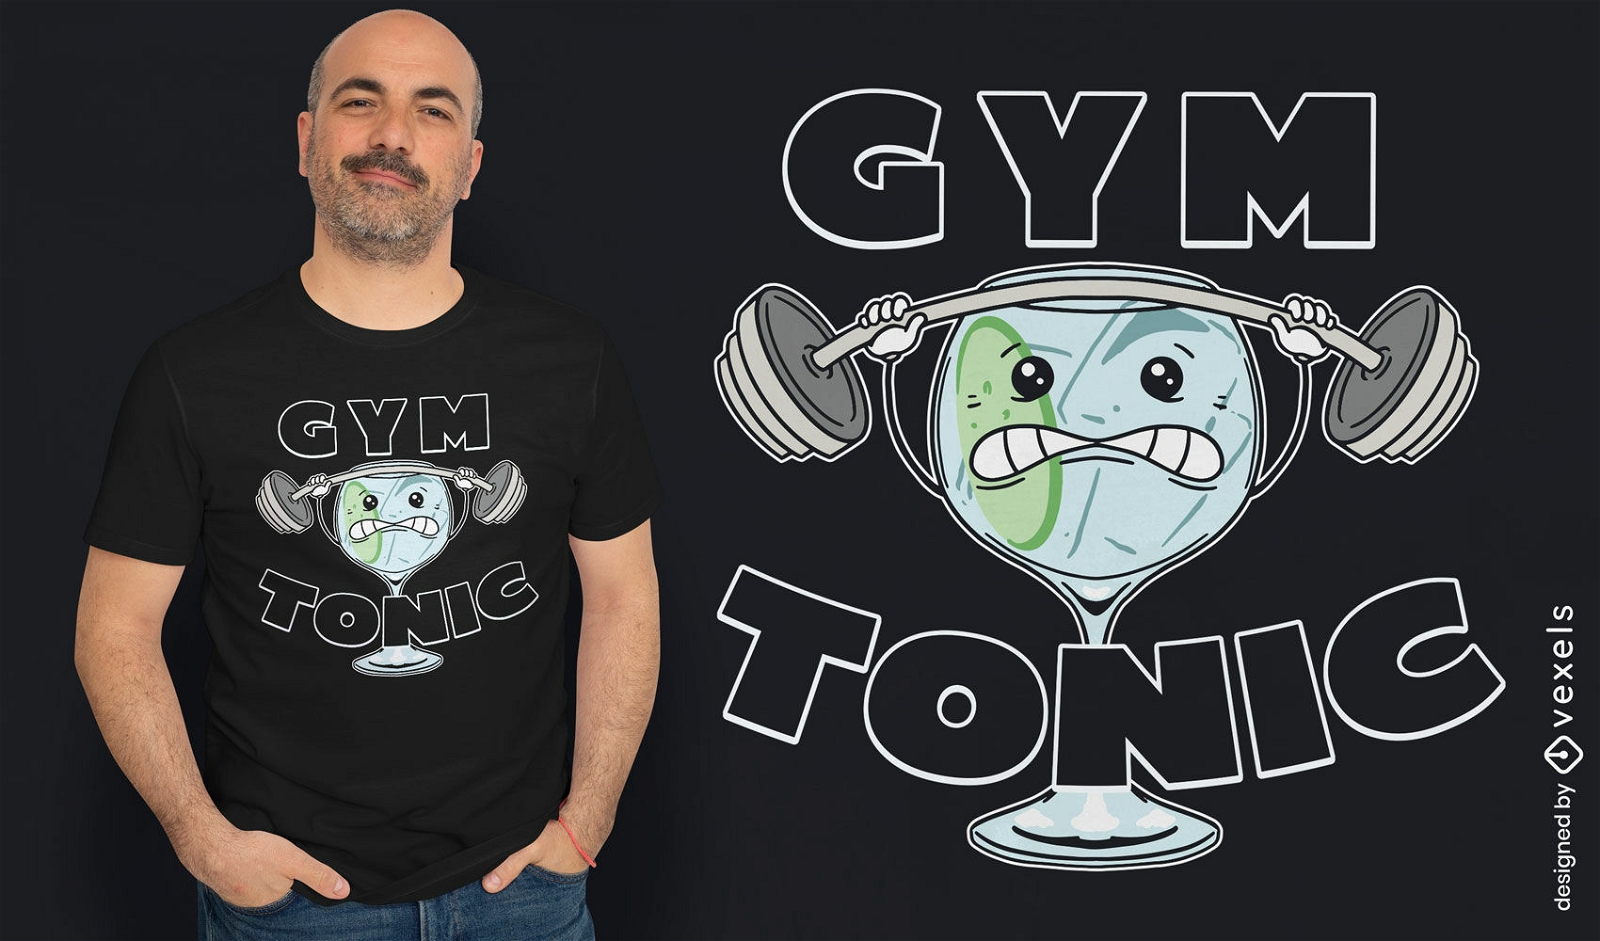 Gym tonic t-shirt design